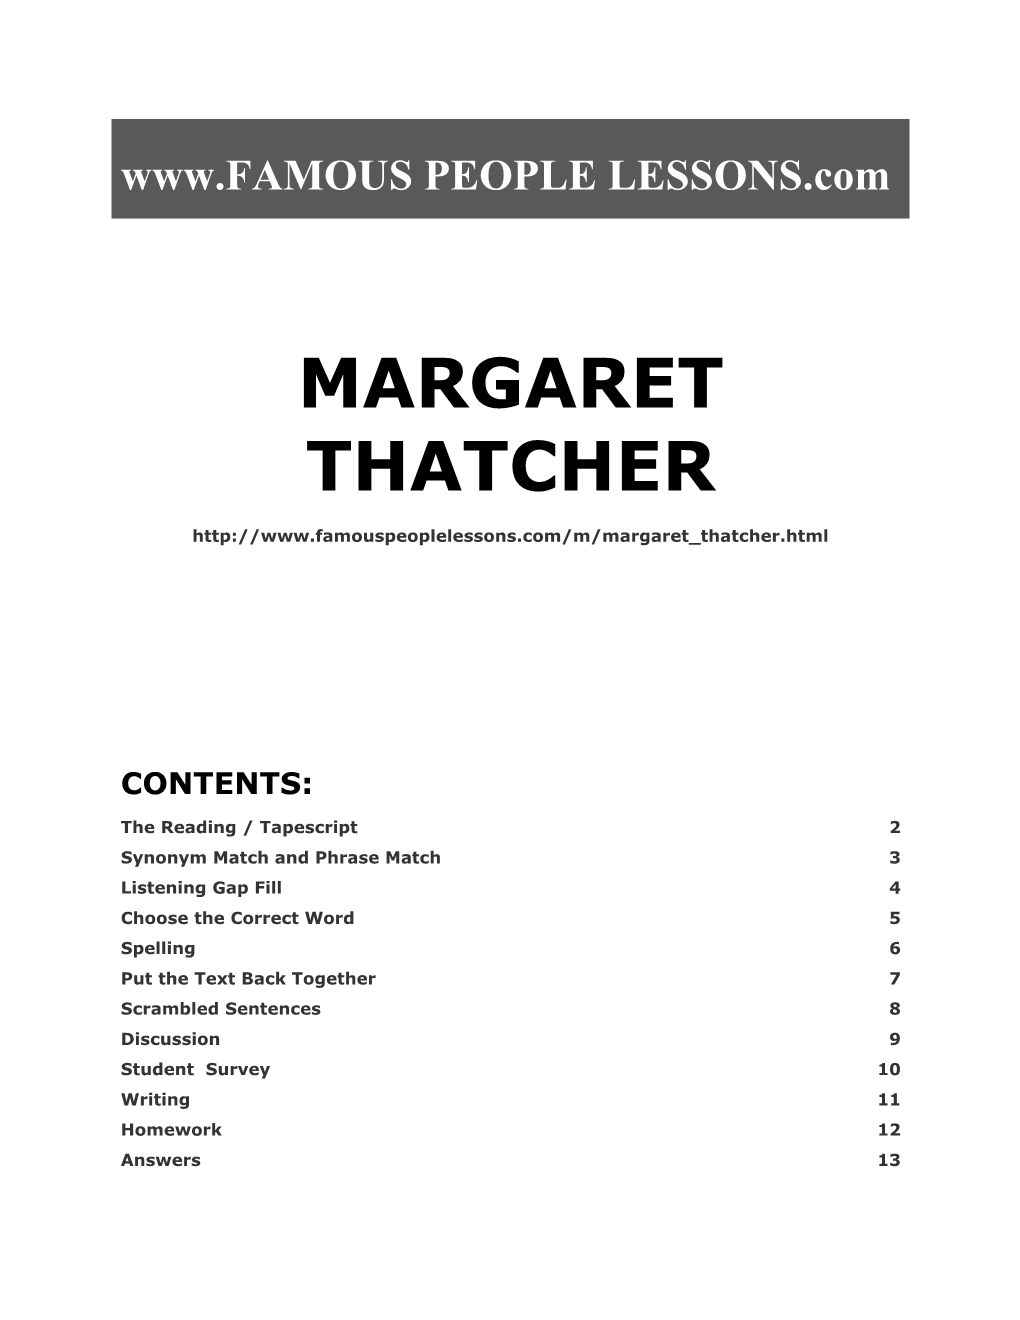 Famous People Lessons - Margaret Thatcher